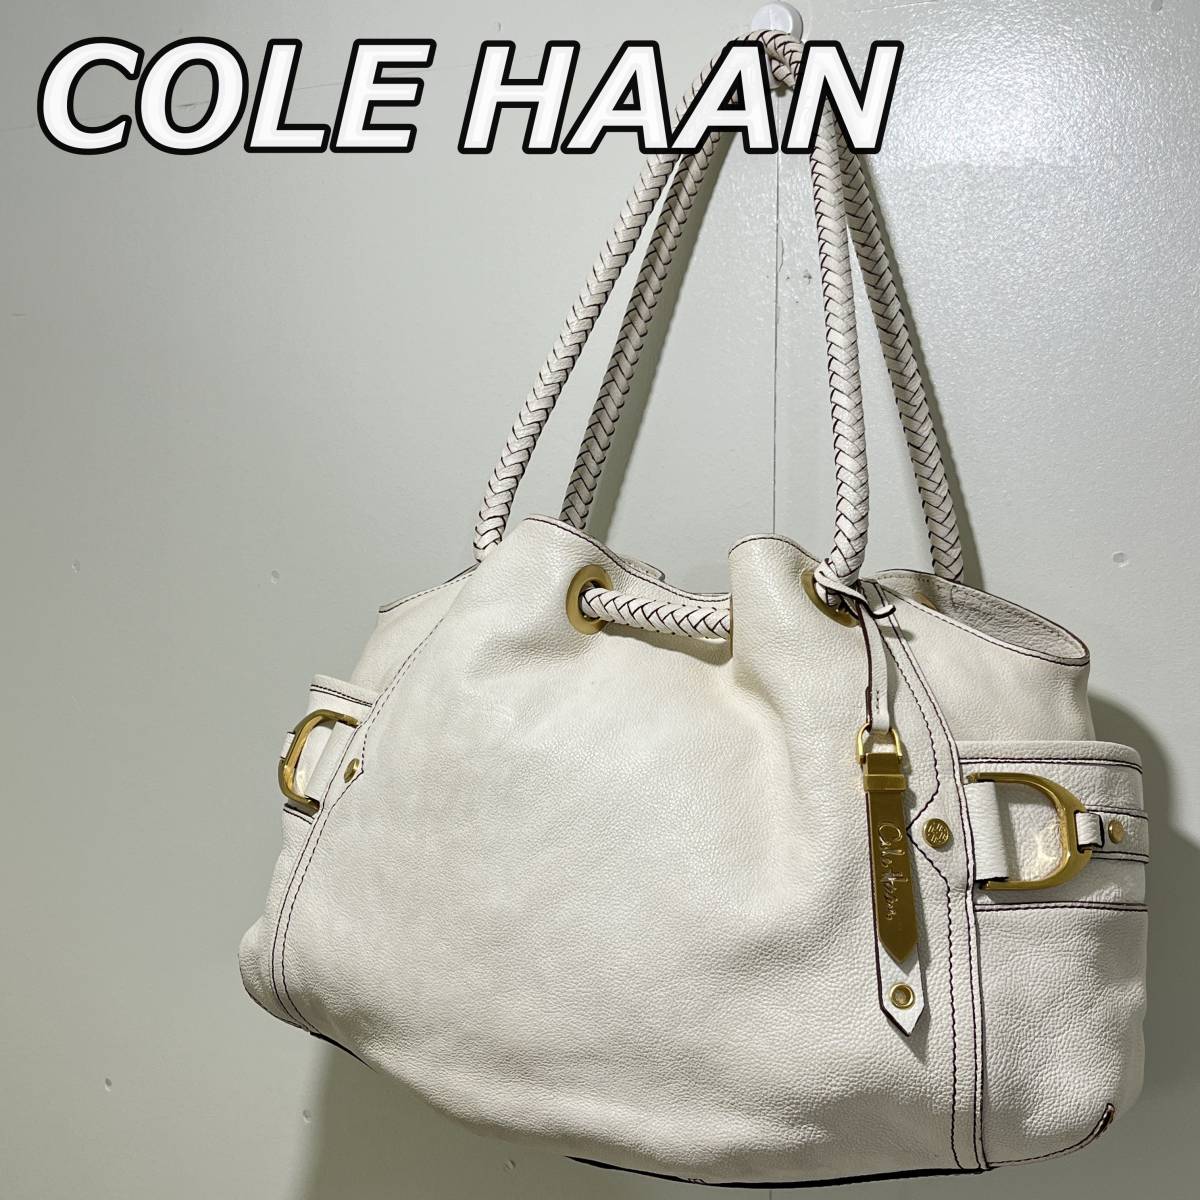 【COLE HAAN】コールハーン 台形型 レザー ハンドバッグ ワンショルダー 手持ち 肩掛け かばん 本革 白 ホワイト